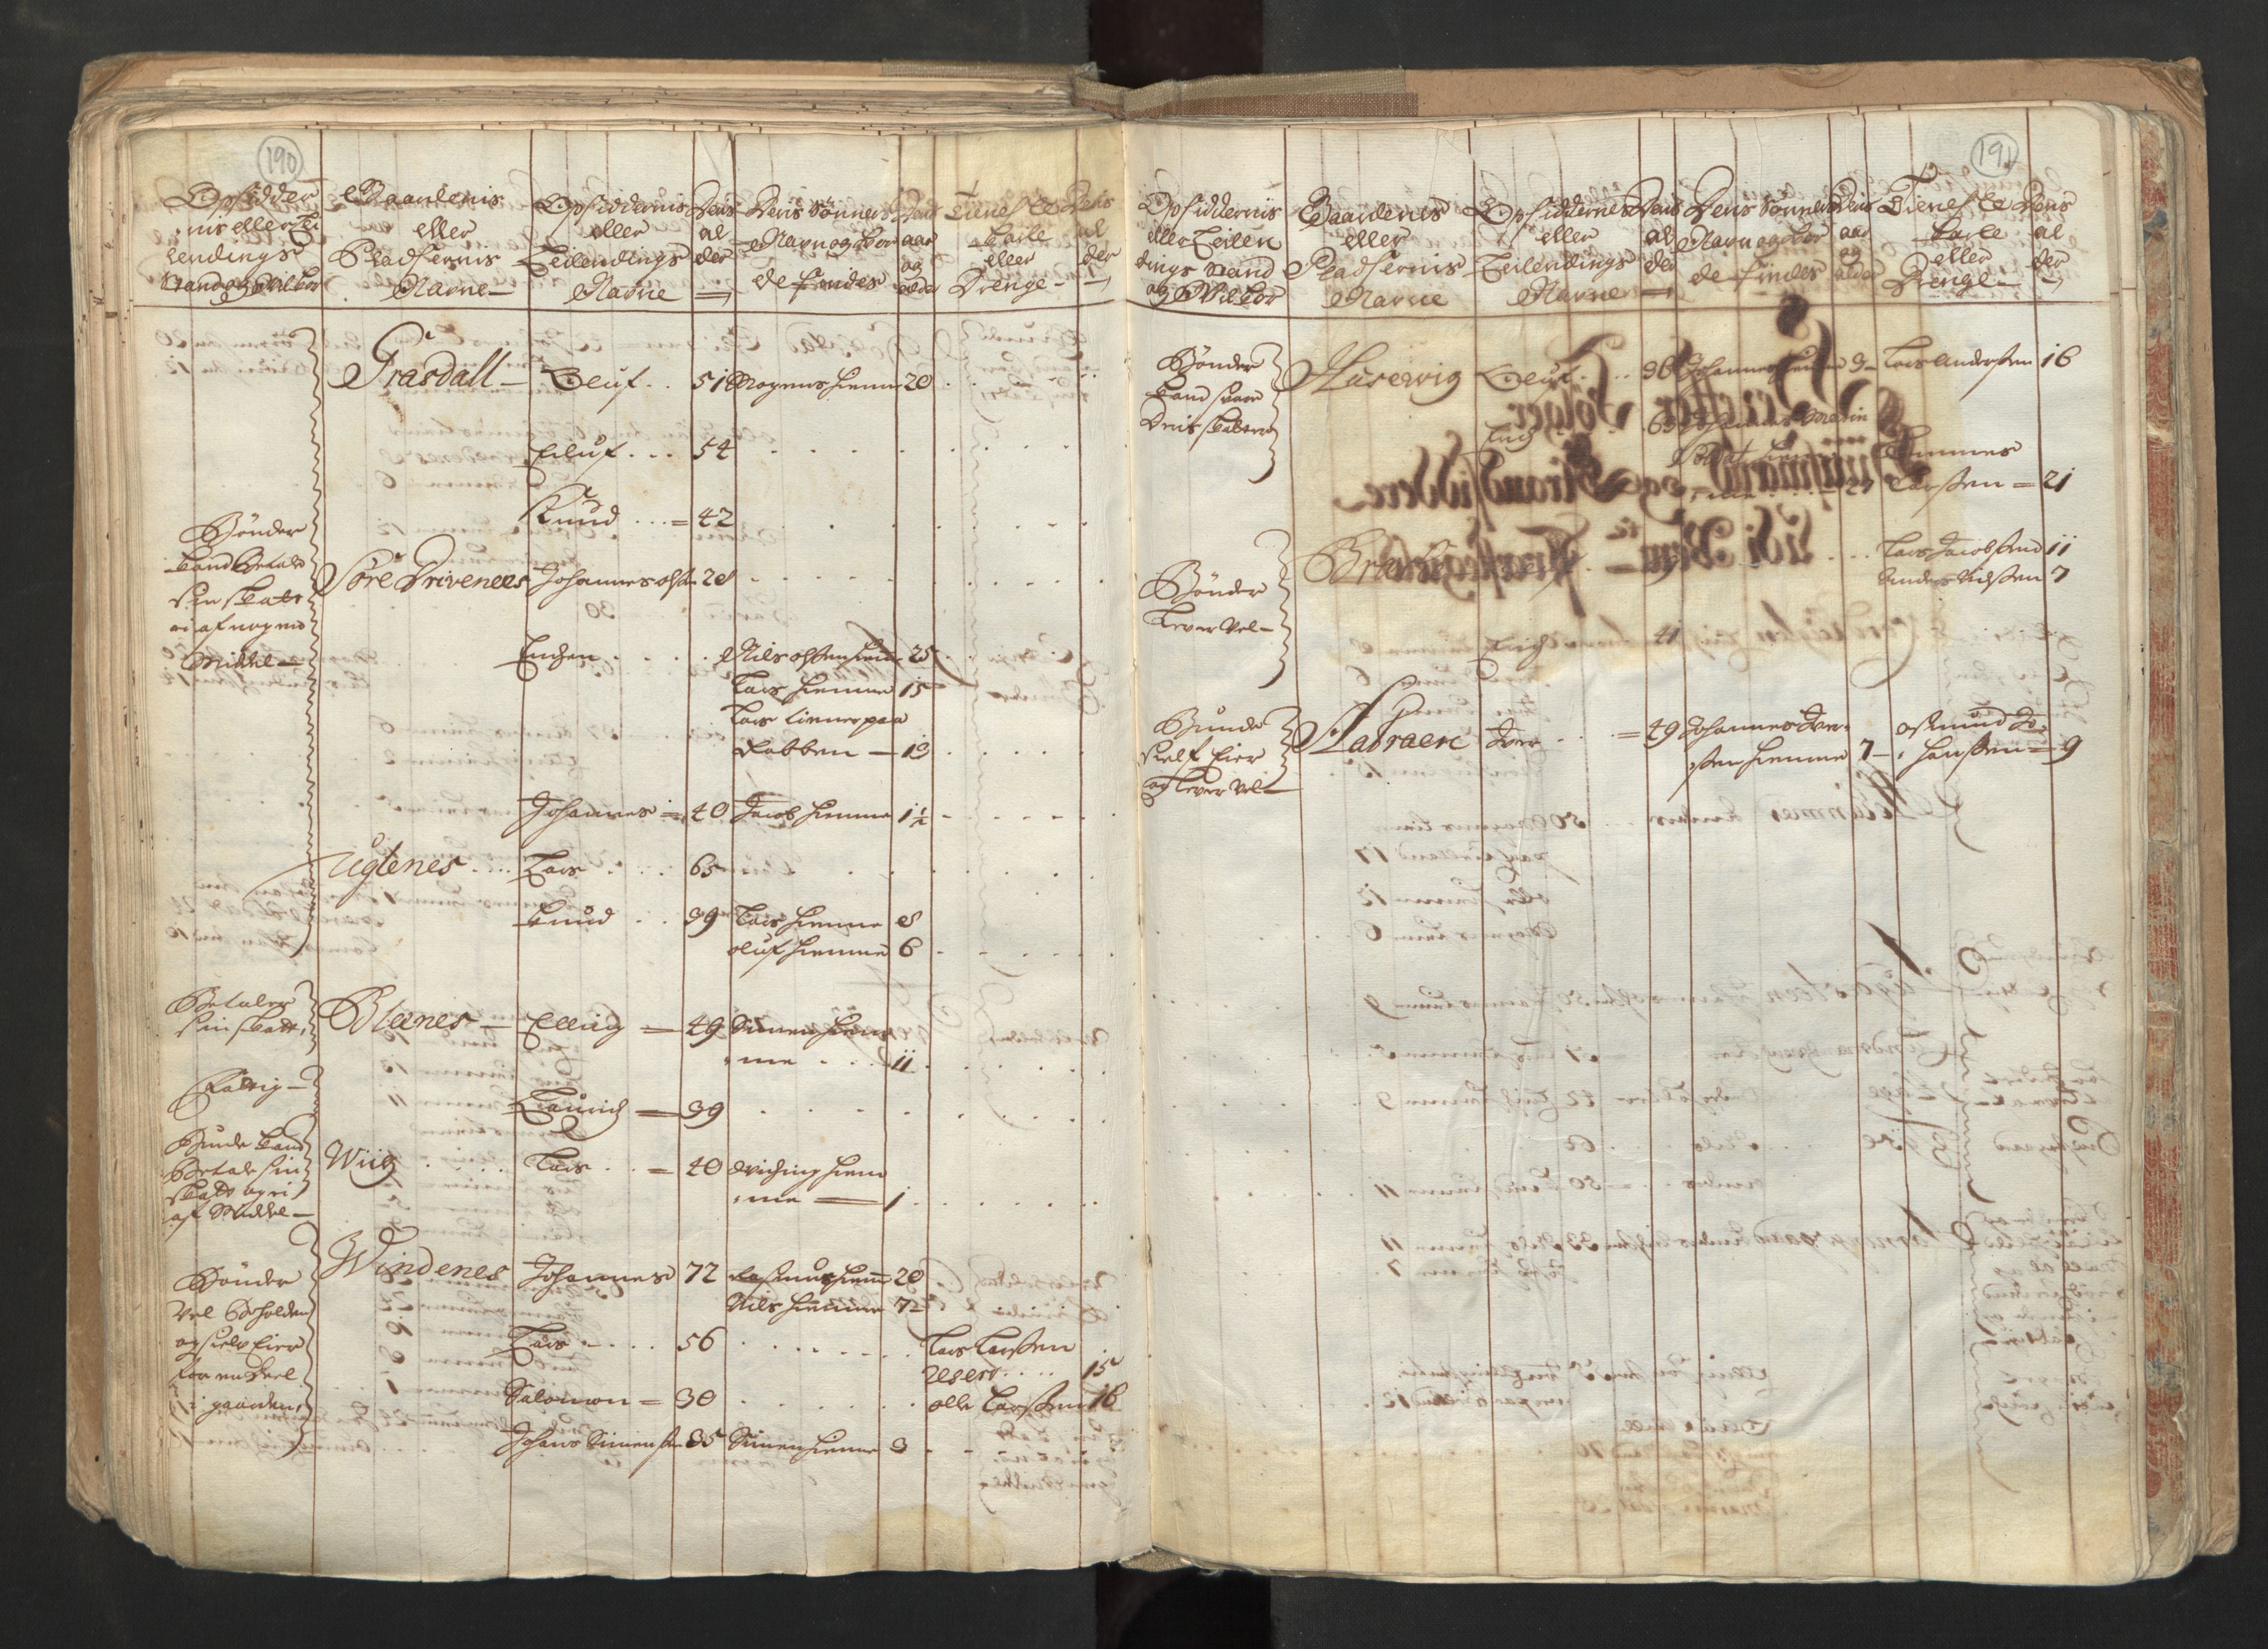 RA, Census (manntall) 1701, no. 6: Sunnhordland fogderi and Hardanger fogderi, 1701, p. 190-191